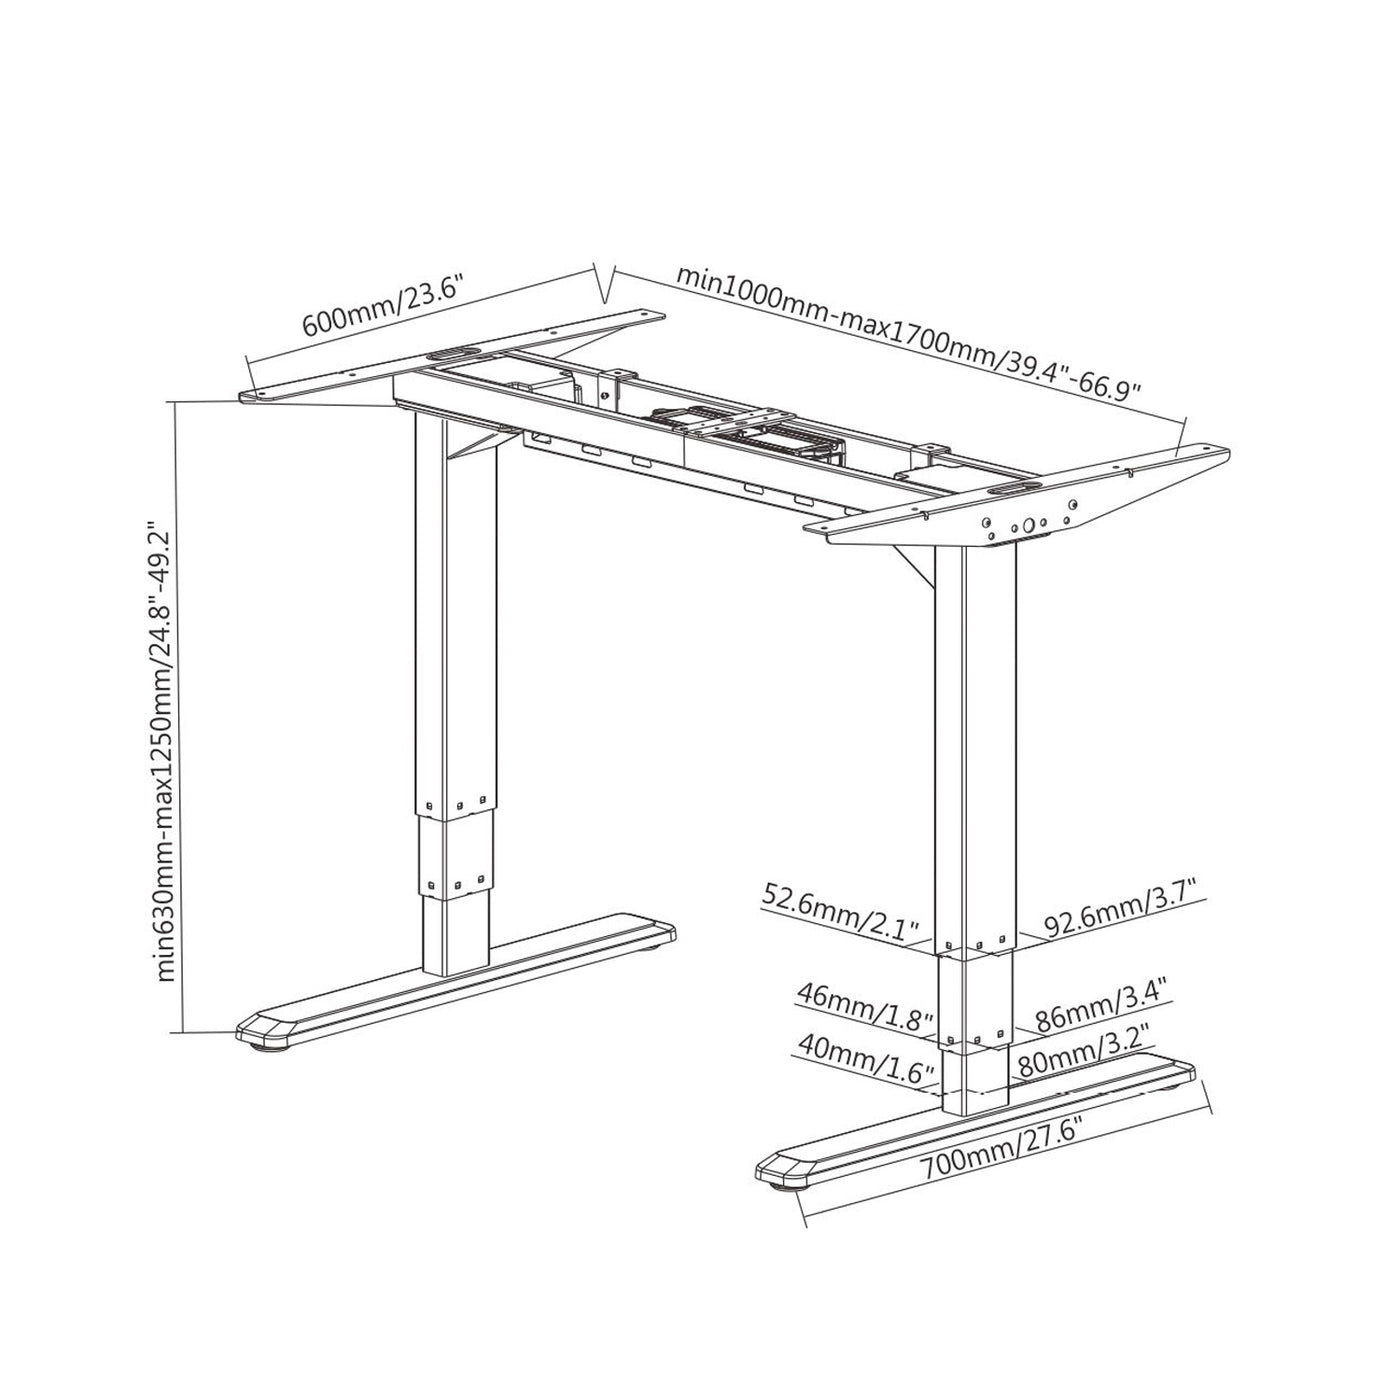 MACLEAN BRACKETS MC-763 Original Extra Sturdy Innovative Electric Standing Frame for Desk